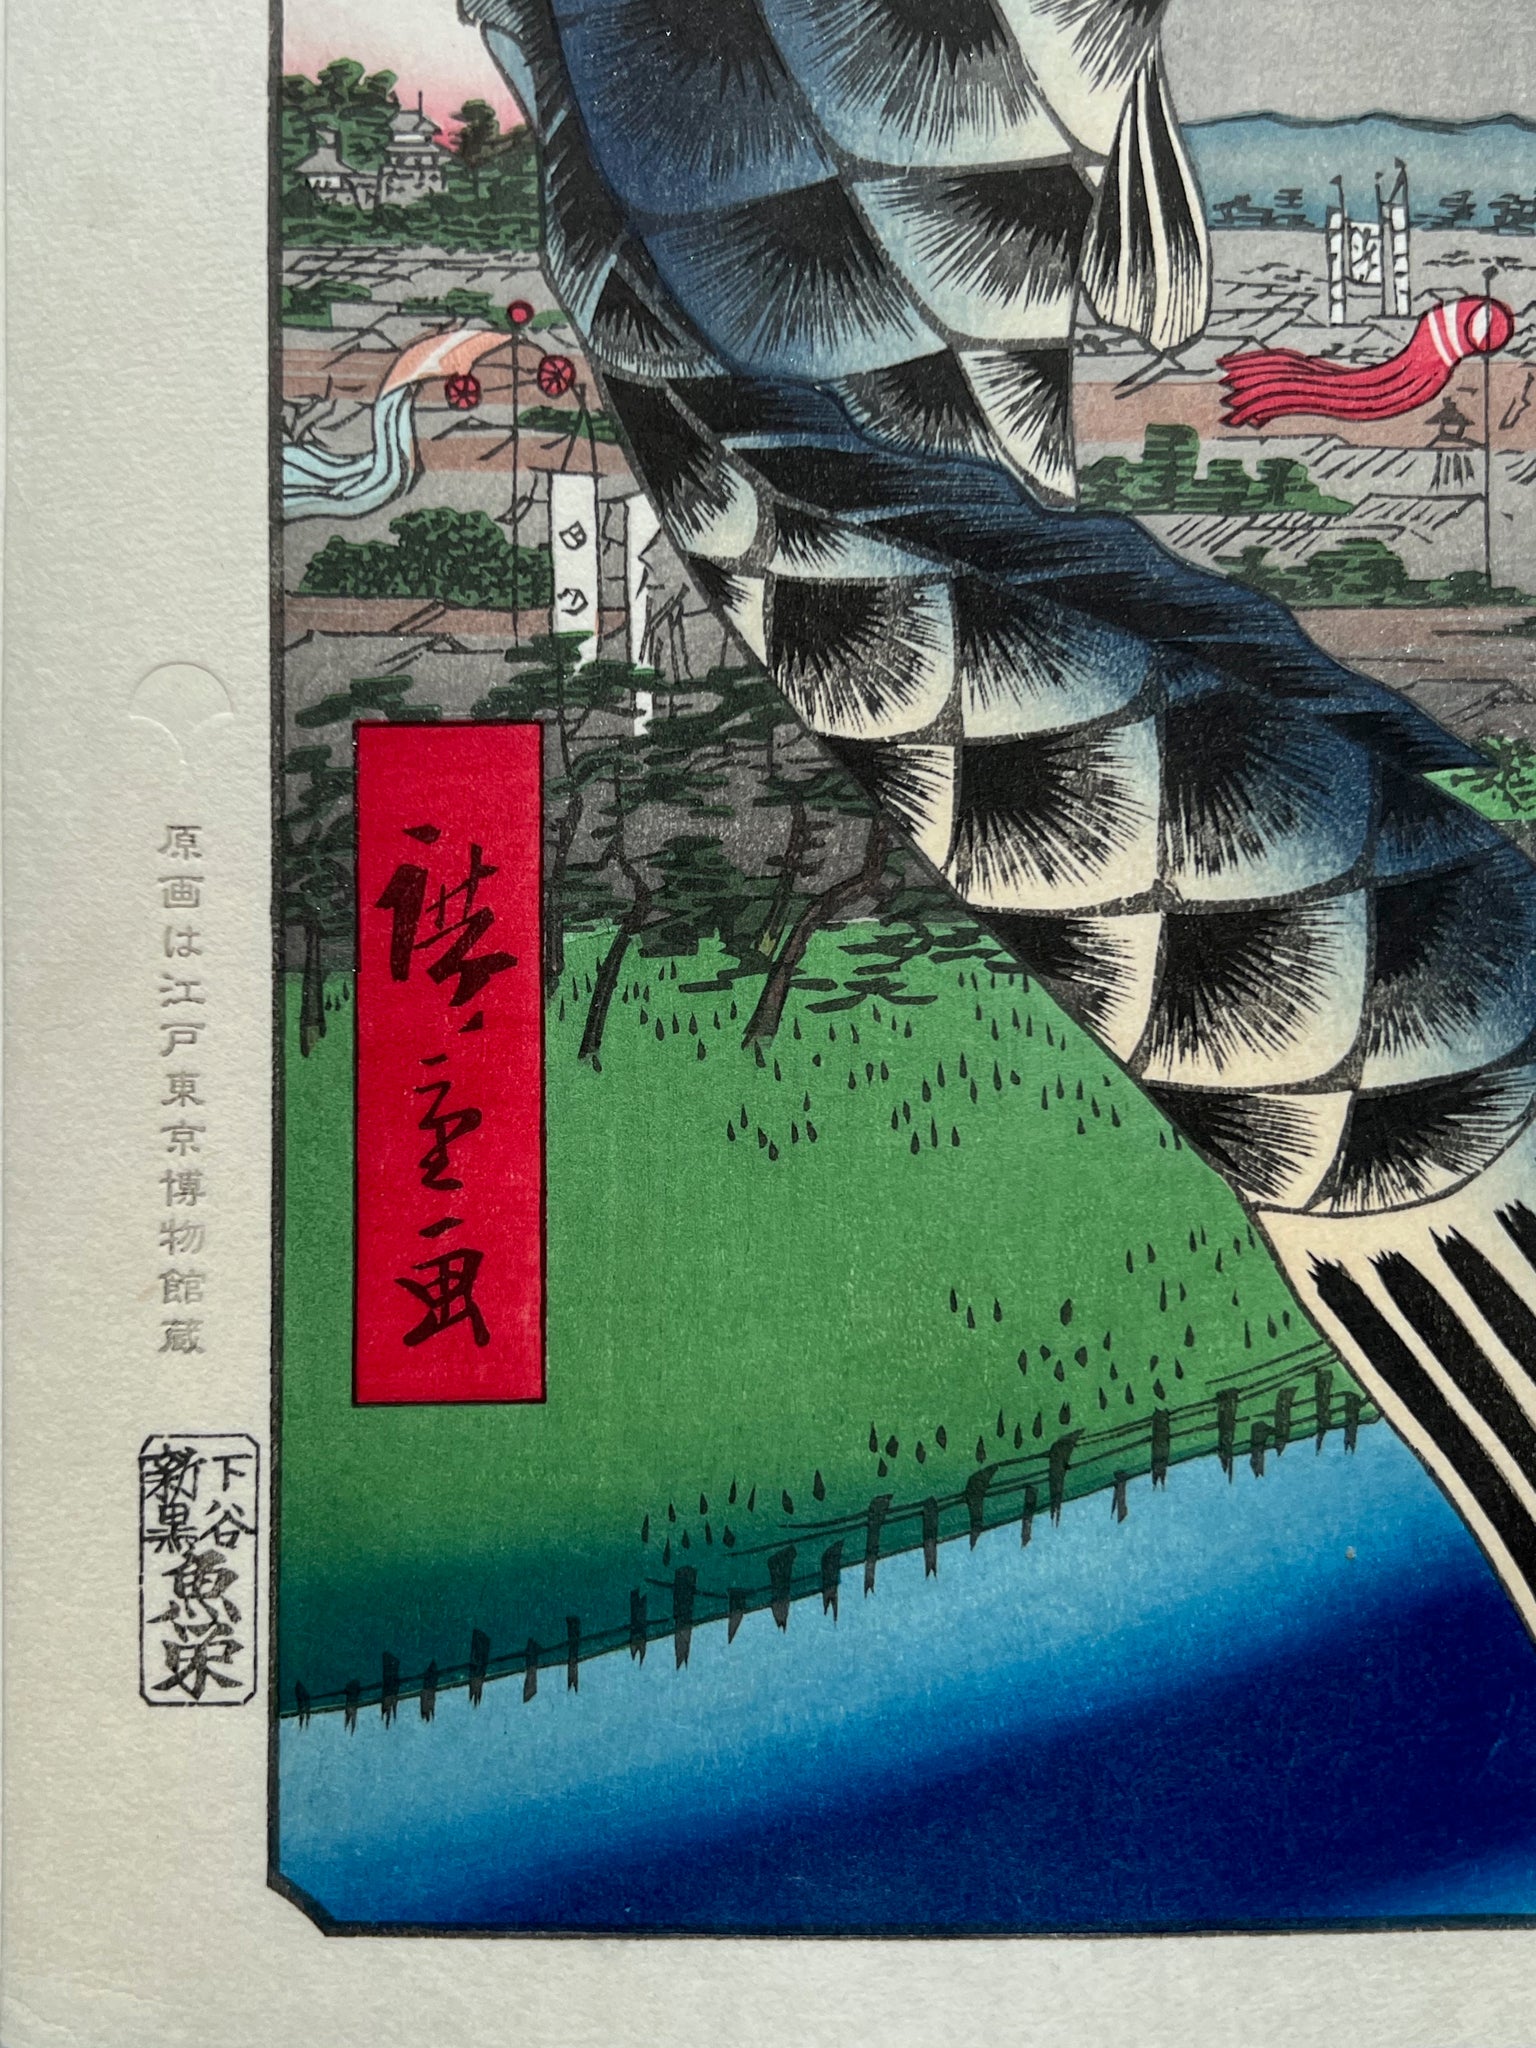     hiroshige-serie-100-vues-edo-suidobashi-koinobori-hi23-01  1536 × 2048 px  estampe japonaise carpe koi en banniere, la signature de l'artiste